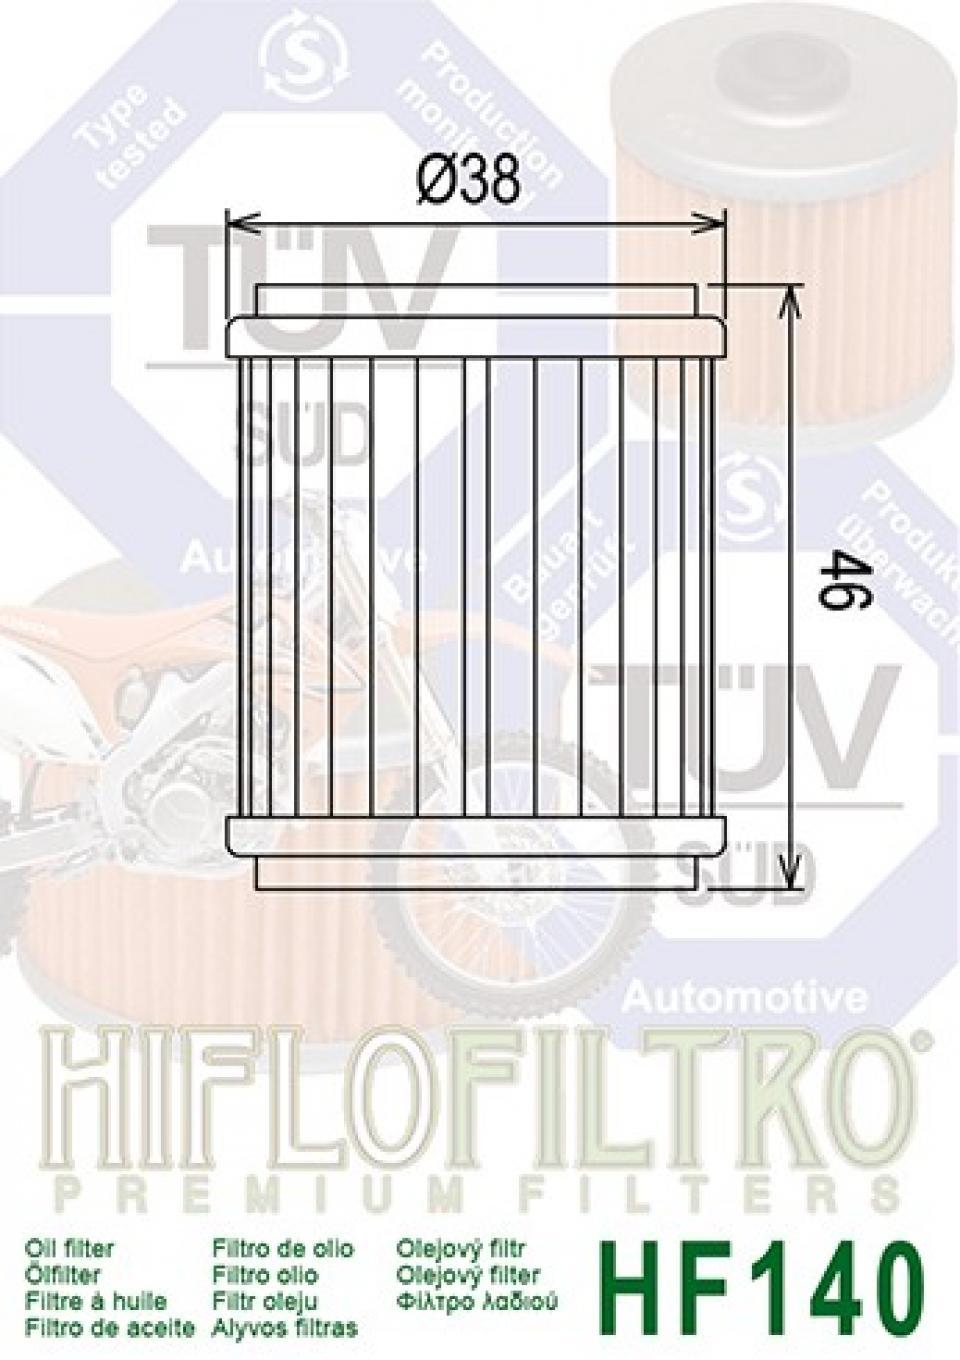 Filtre à huile Hiflofiltro pour Moto Husqvarna 125 SM S4 2011 à 2013 Neuf